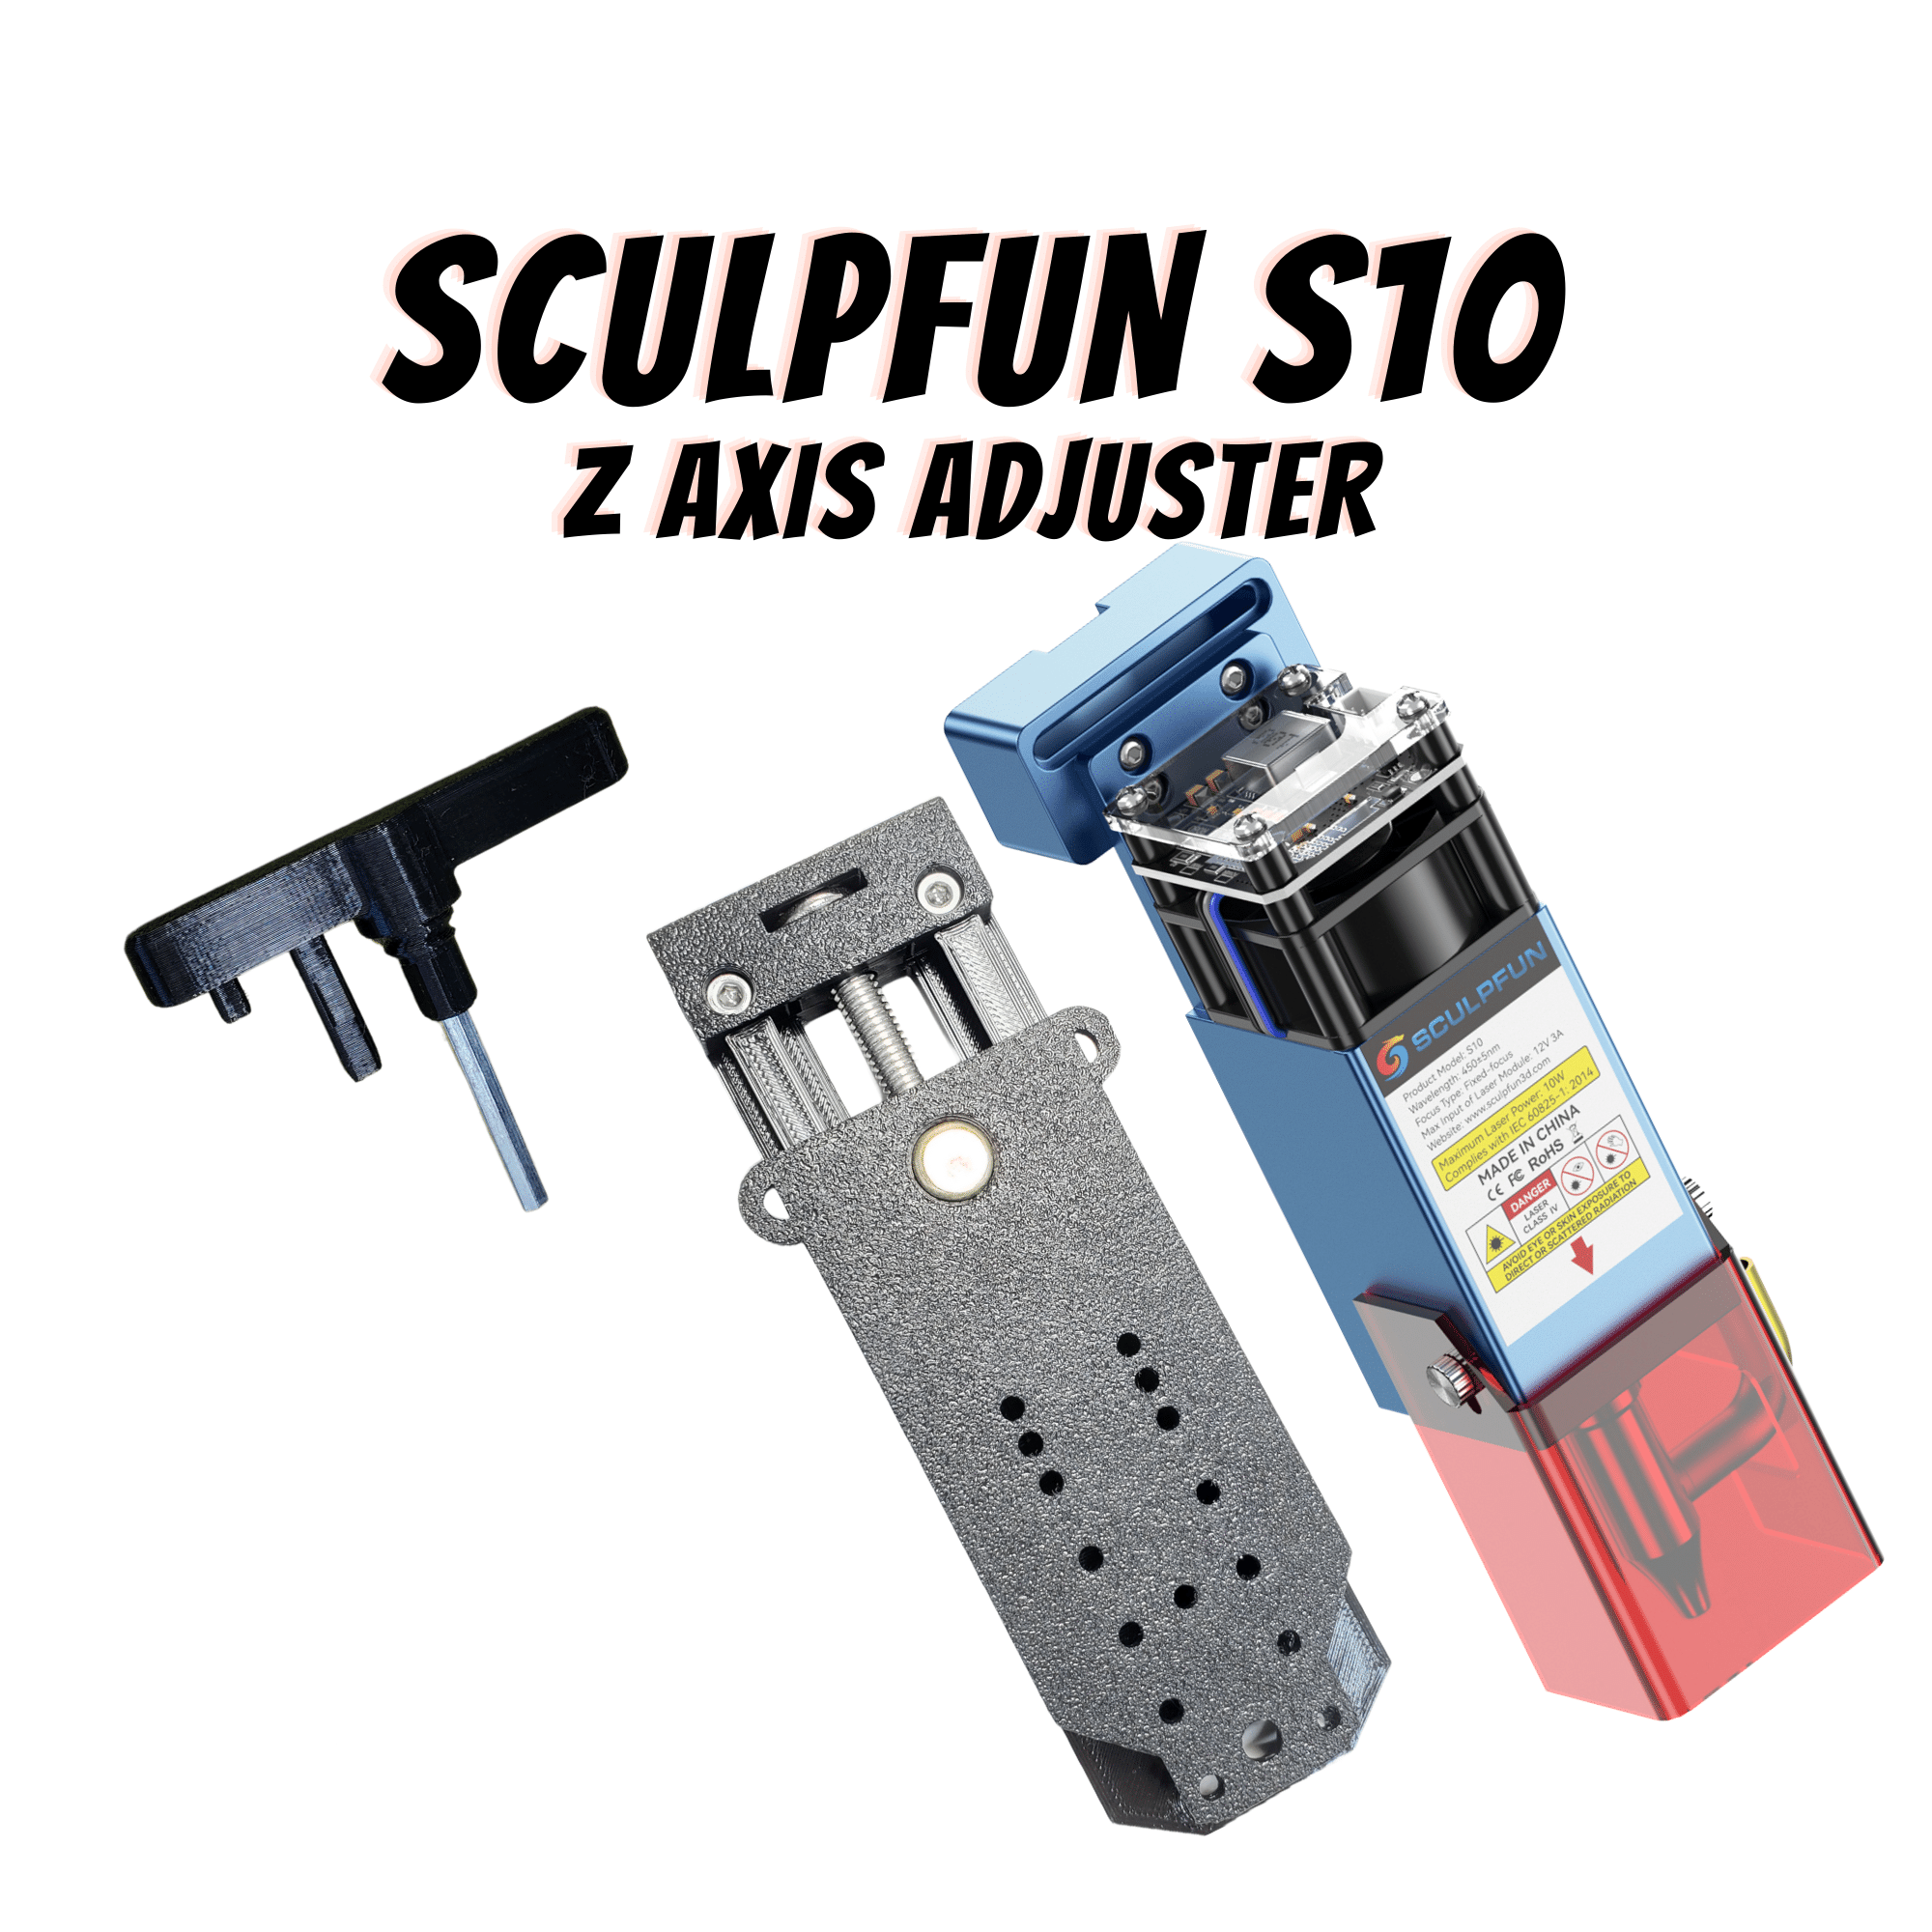 Sculpfun s10. Sculpfun s9 концевые выключатели. Sculpfun s9.